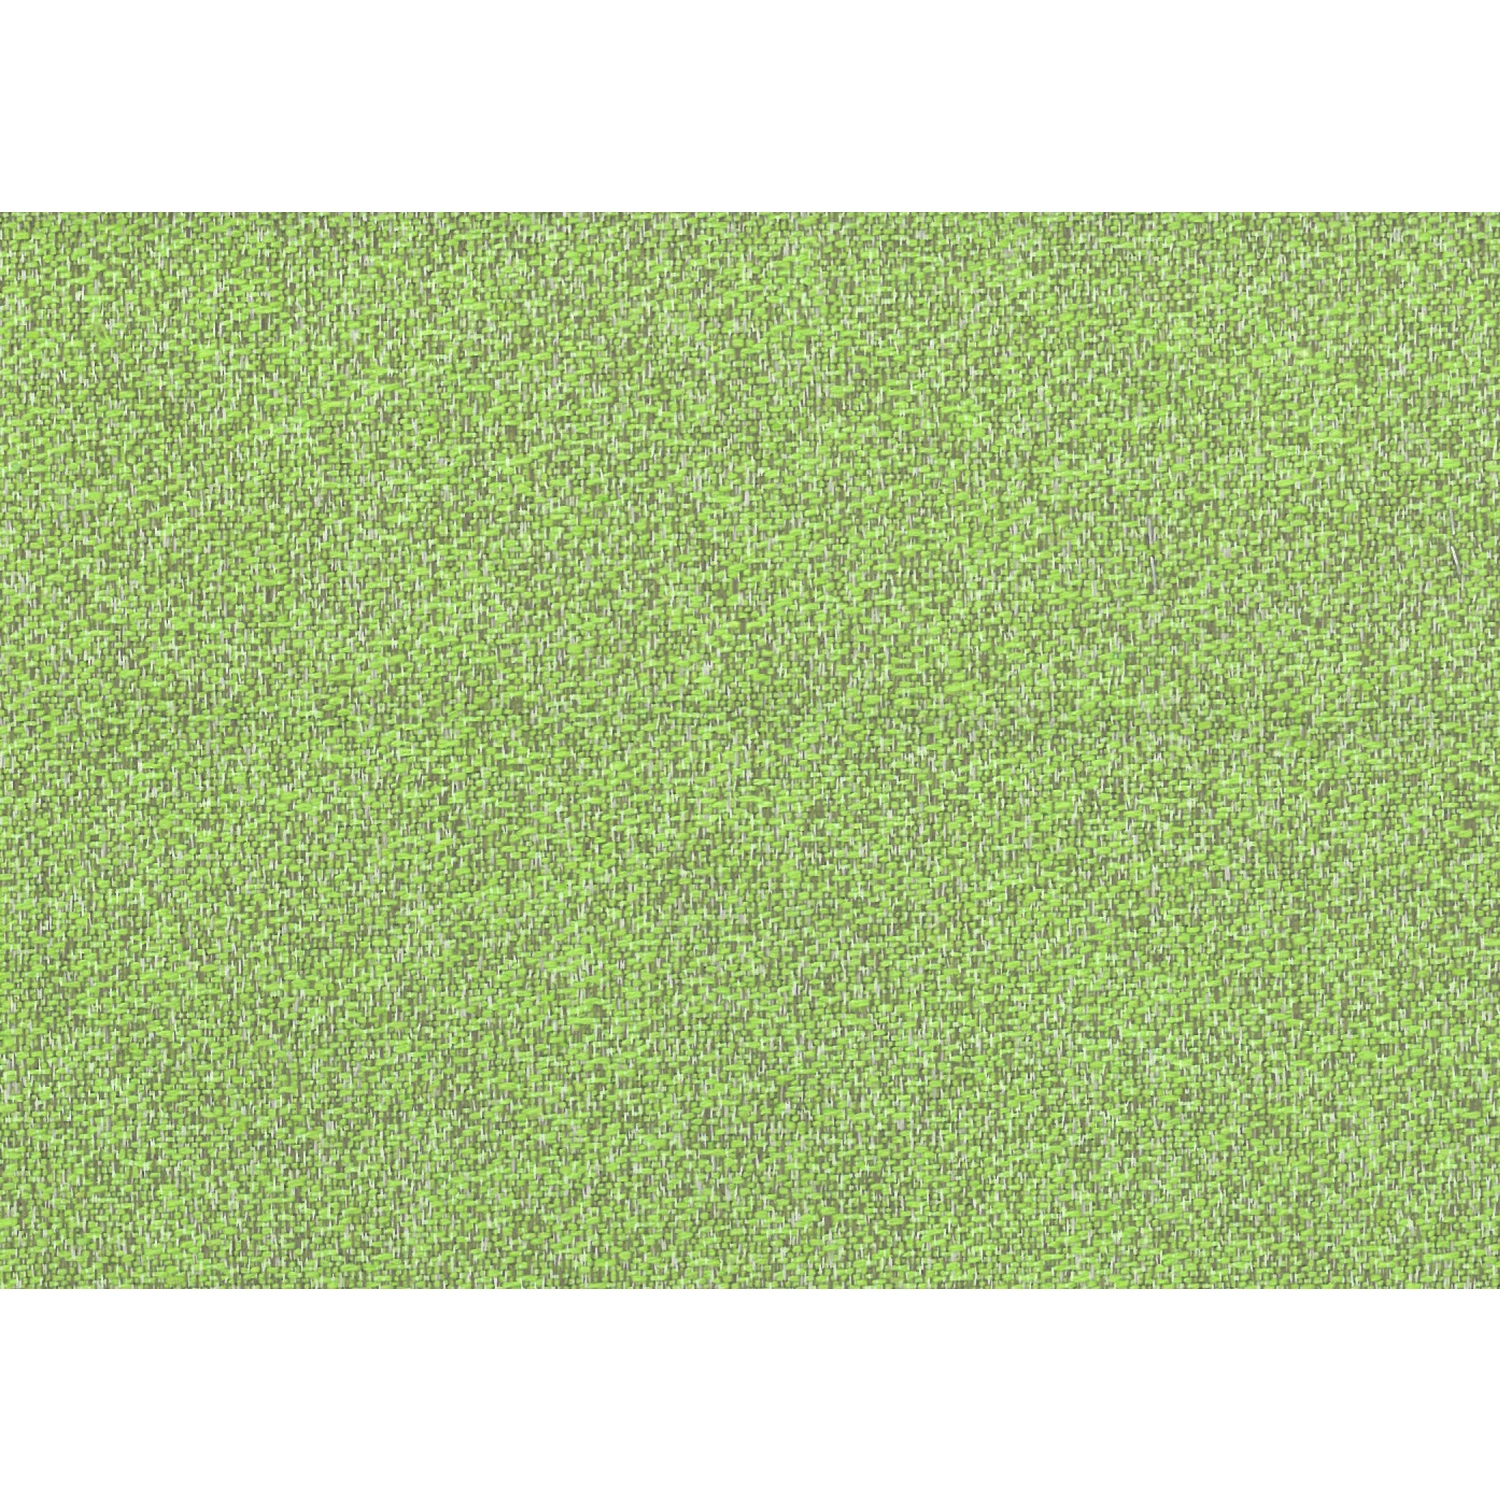 BEST Sesselauflage BxL: grün, x 50 cm 120 »Soft-Line«